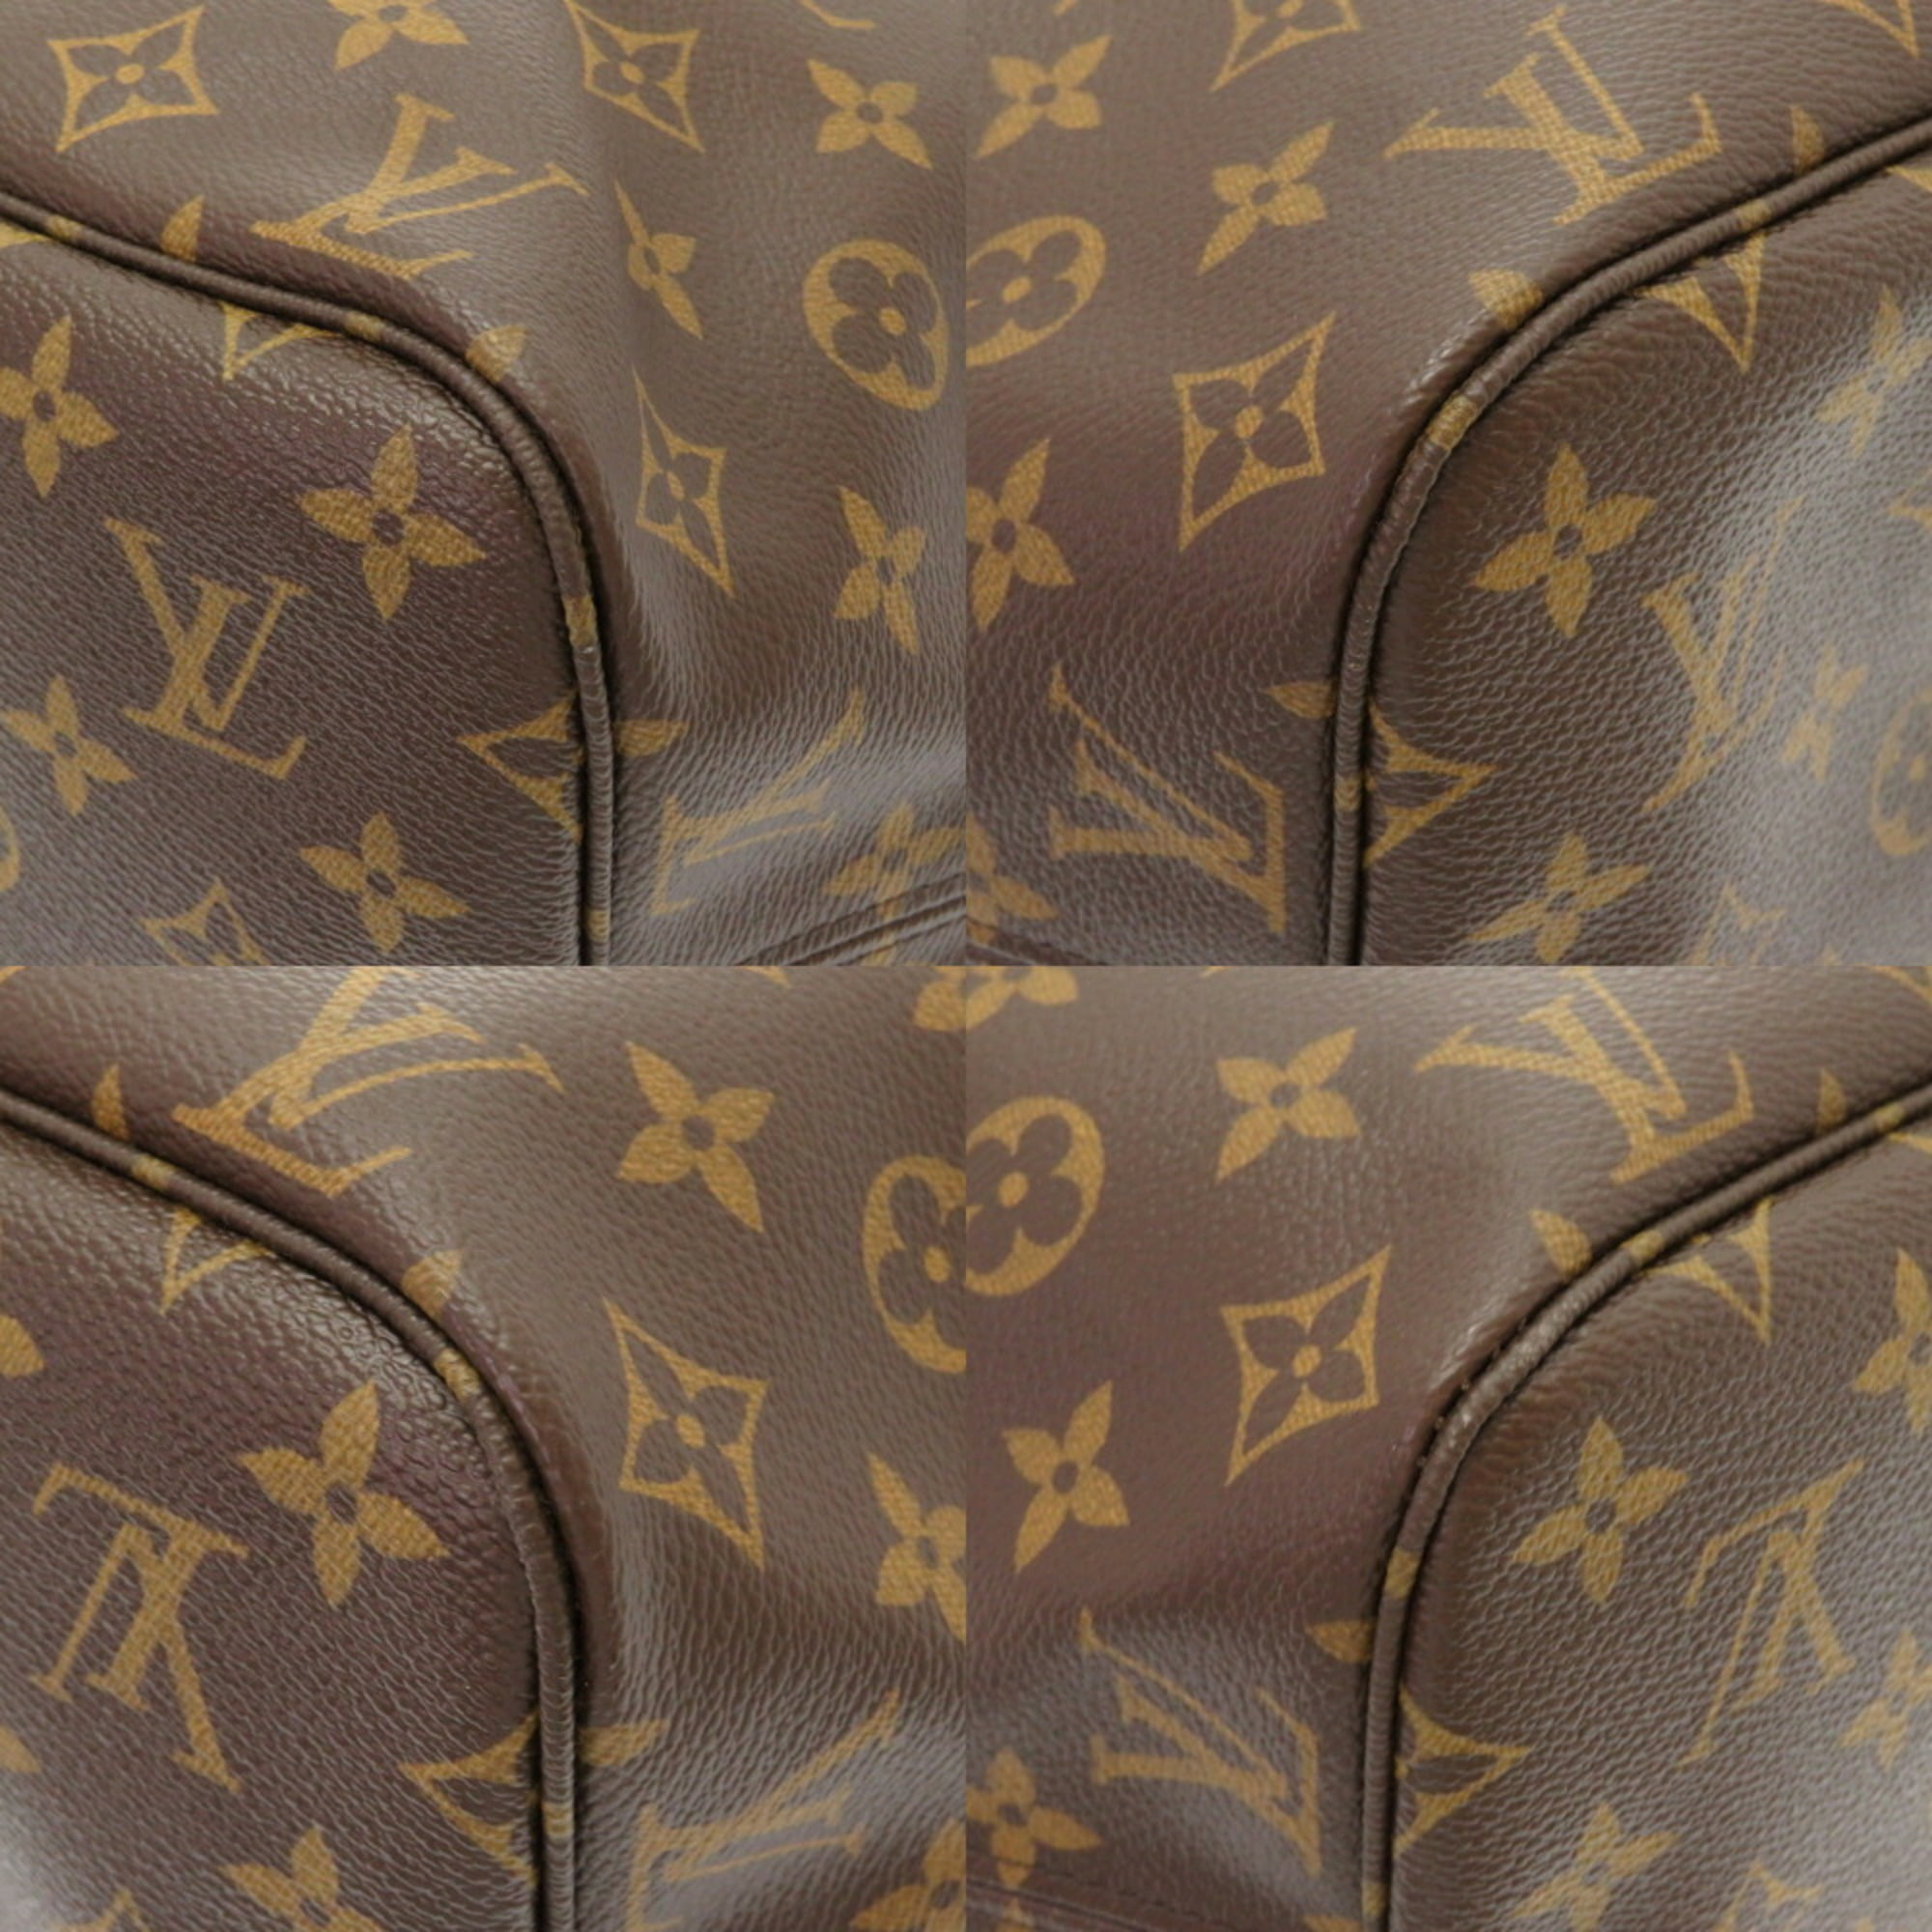 Authentic Louis Vuitton Neverfull MM Monogram Tote Bag M40156